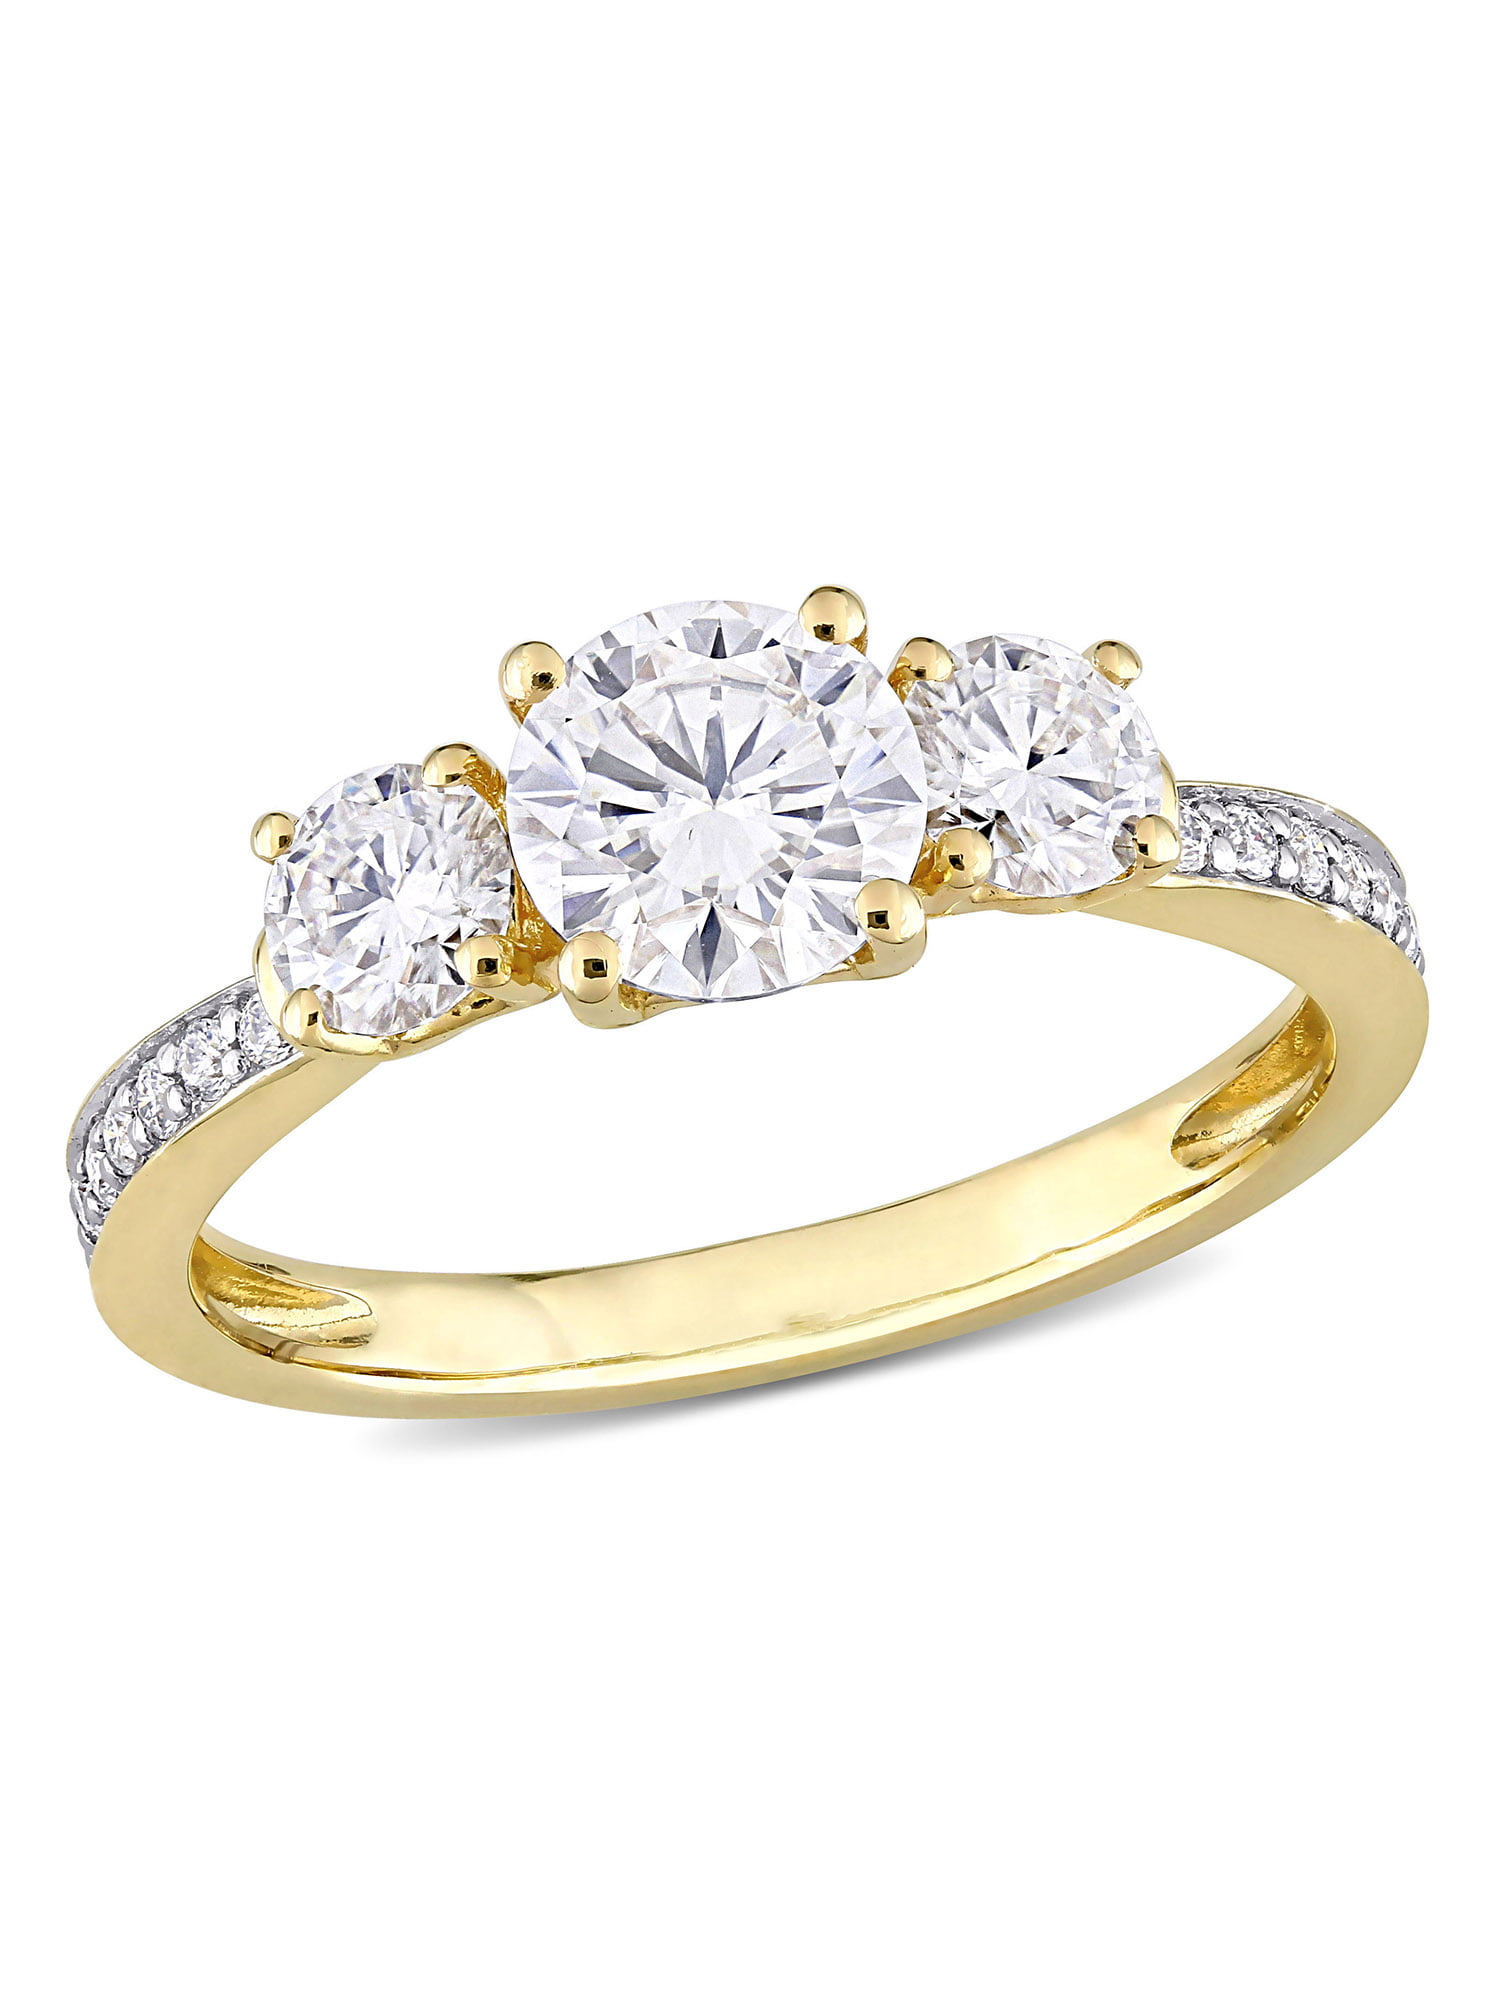 9ct White Gold Princess Cut Cubic Zirconia Engagement  Ring Shoulder stones 